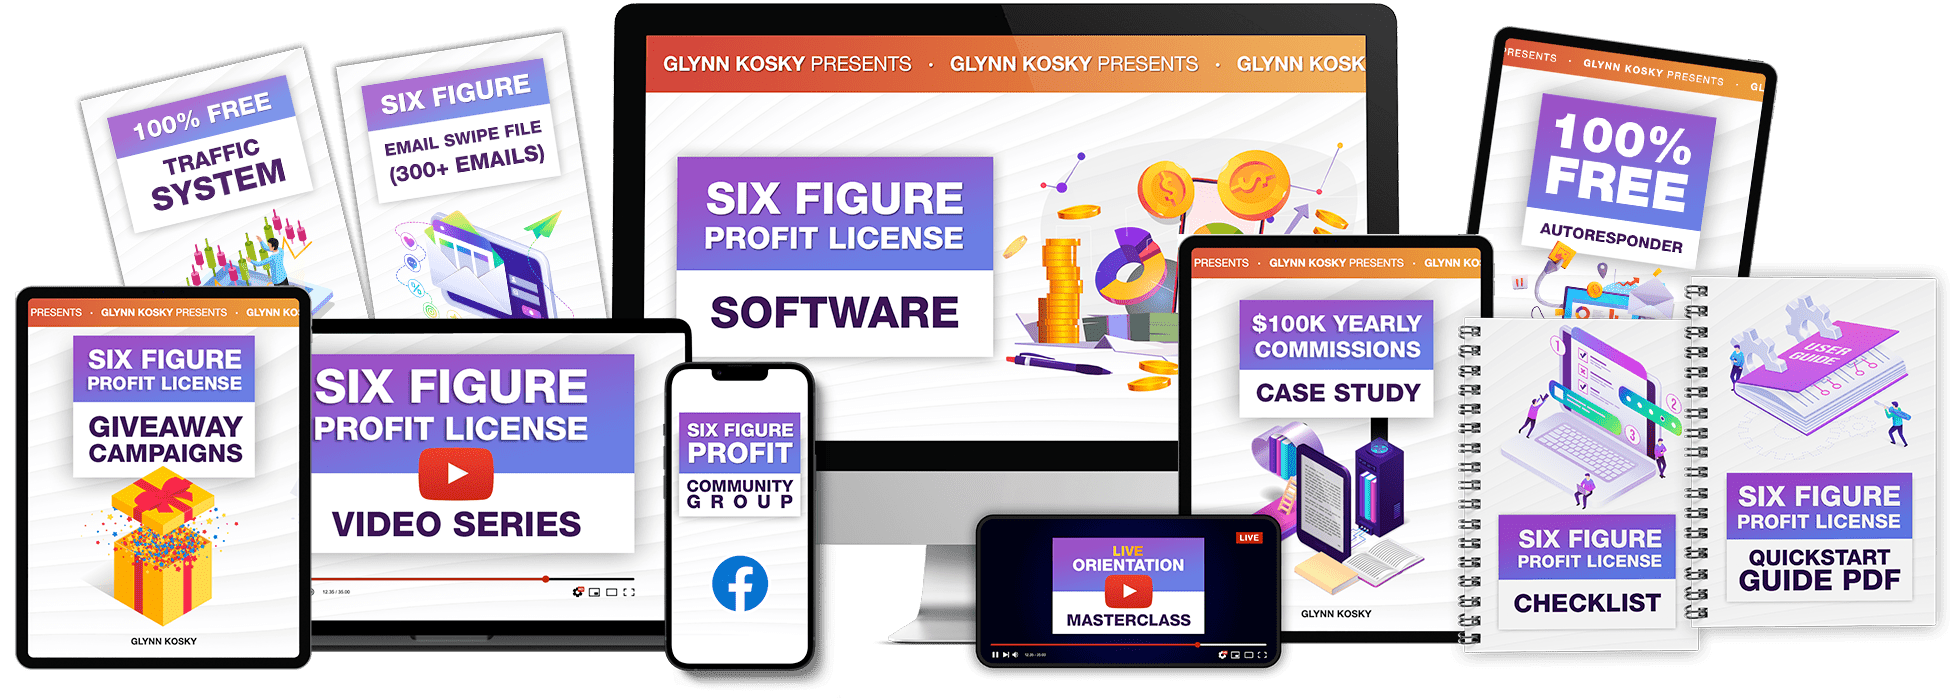 Glynn Kosky – Six Figure Profit License Free Download